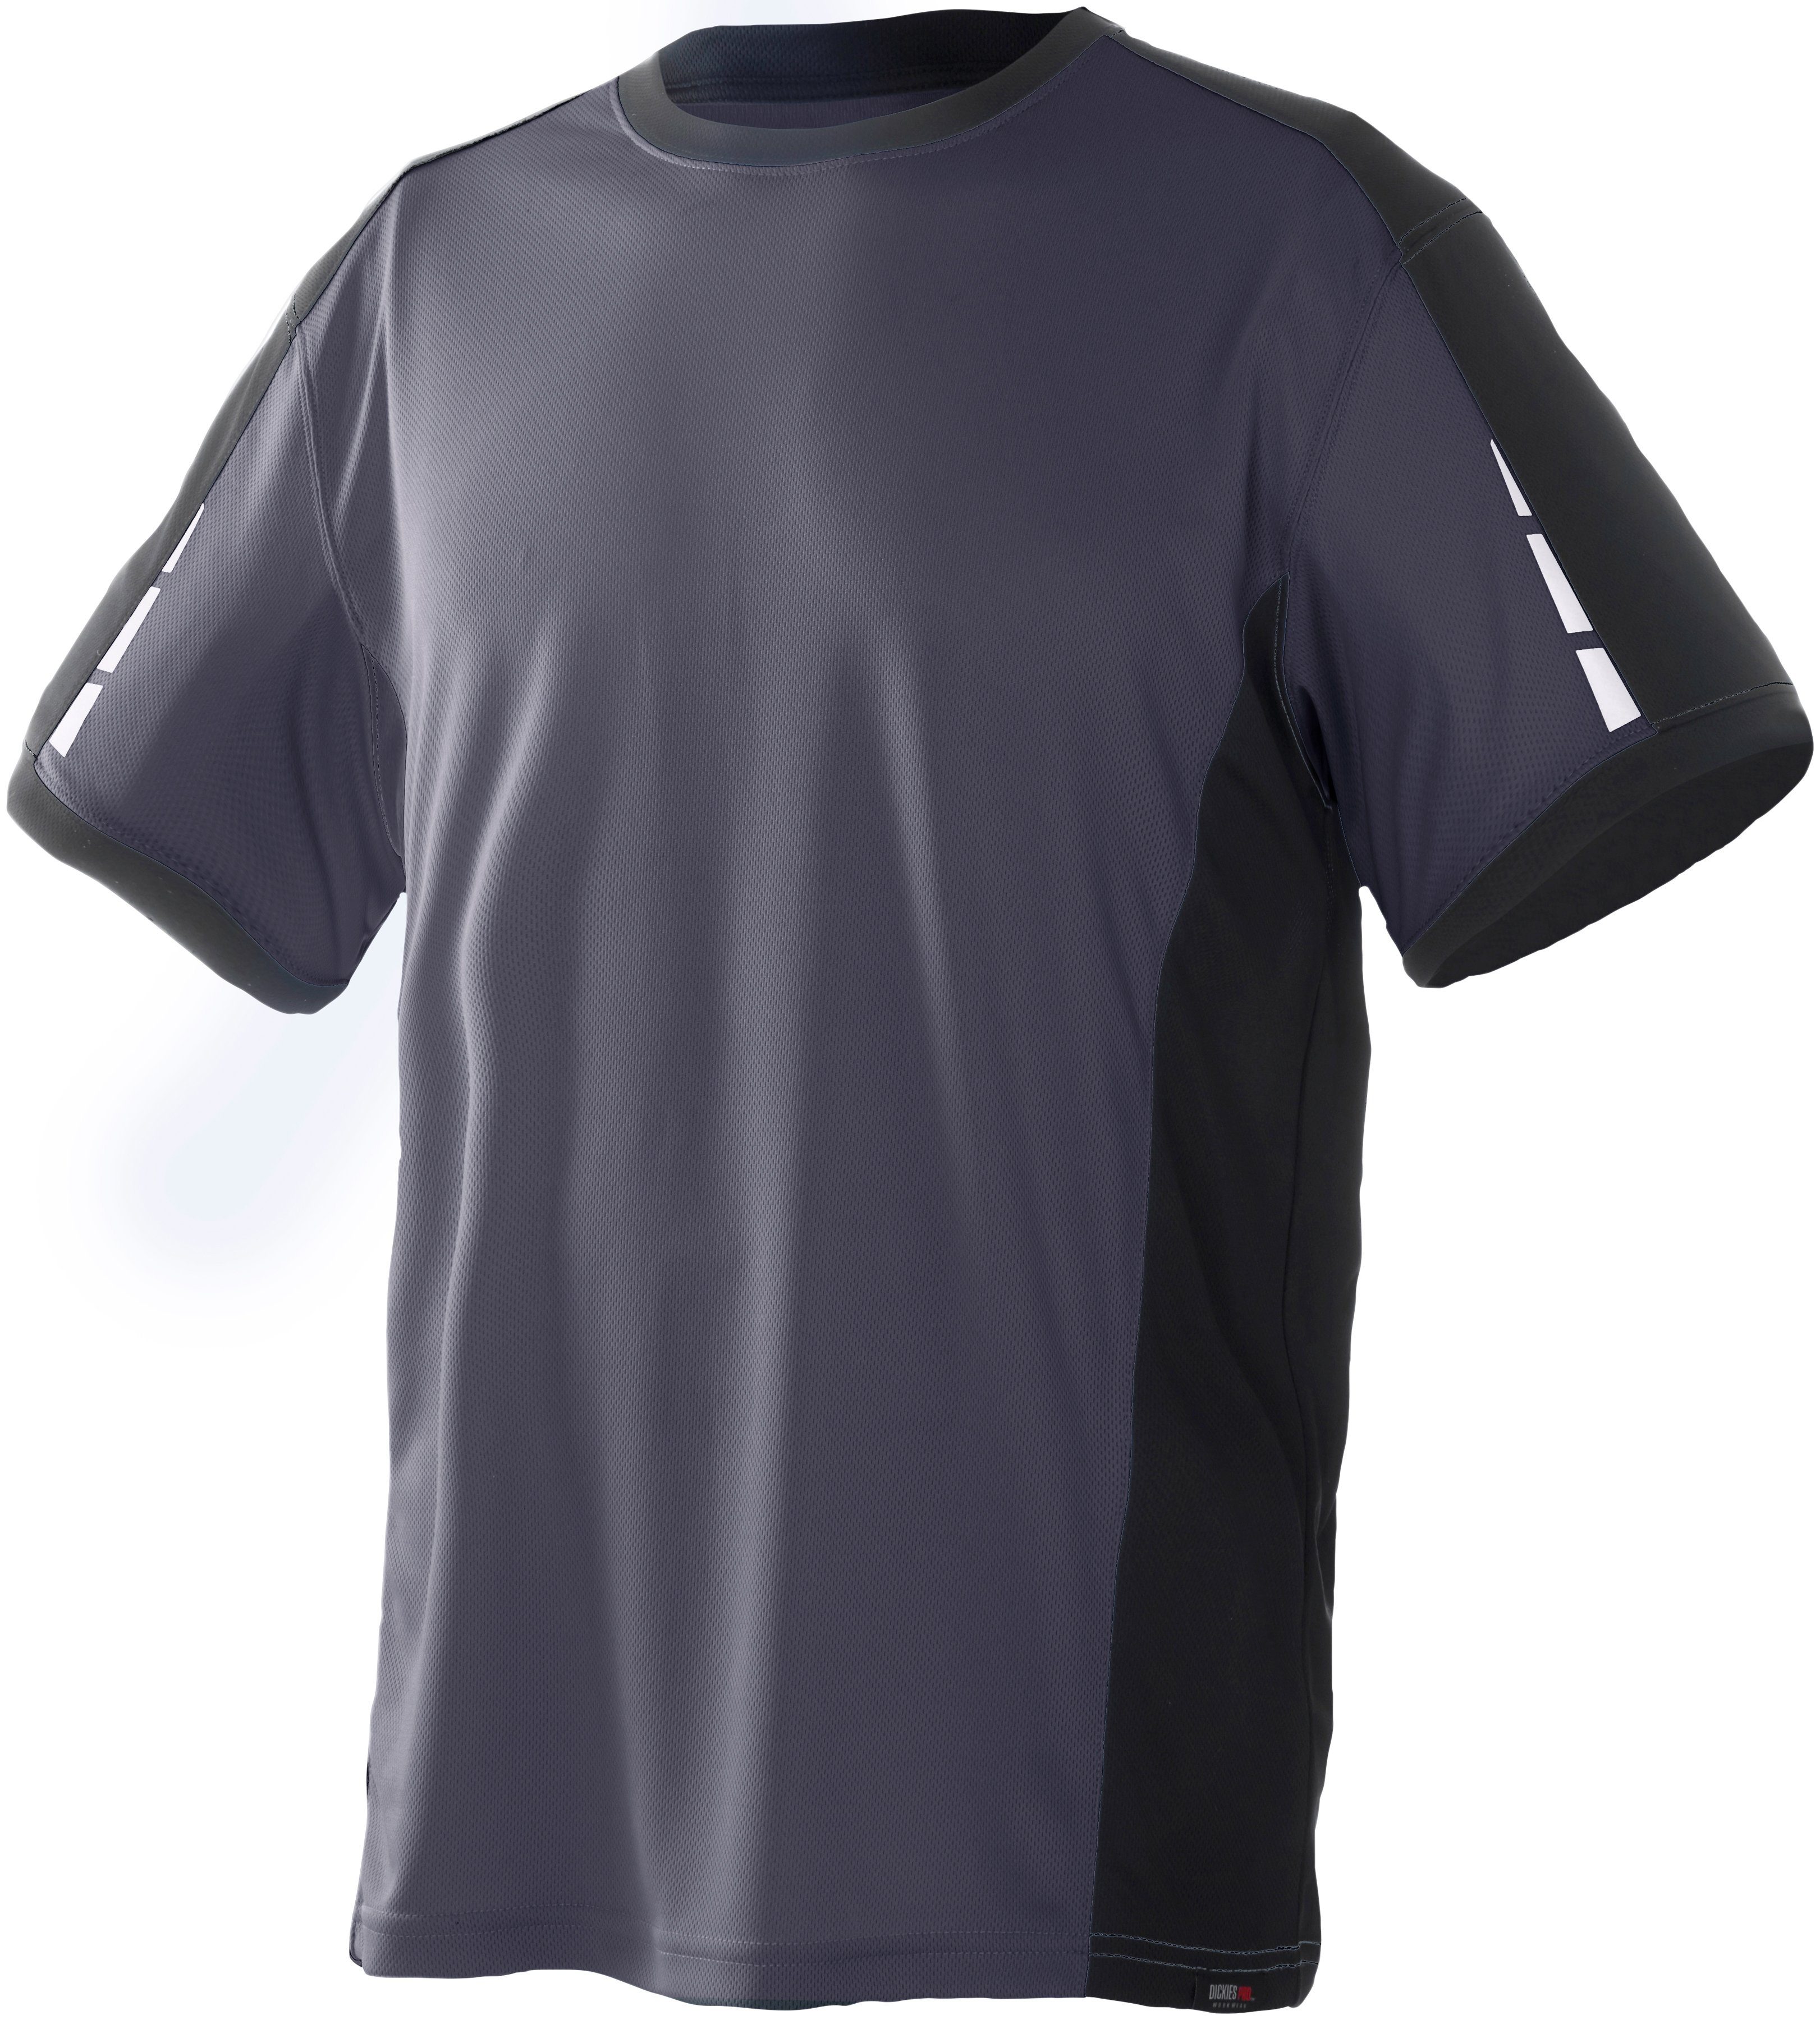 Dickies T-Shirt Pro mit reflektierenden Details an den Ärmeln grau-schwarz | T-Shirts